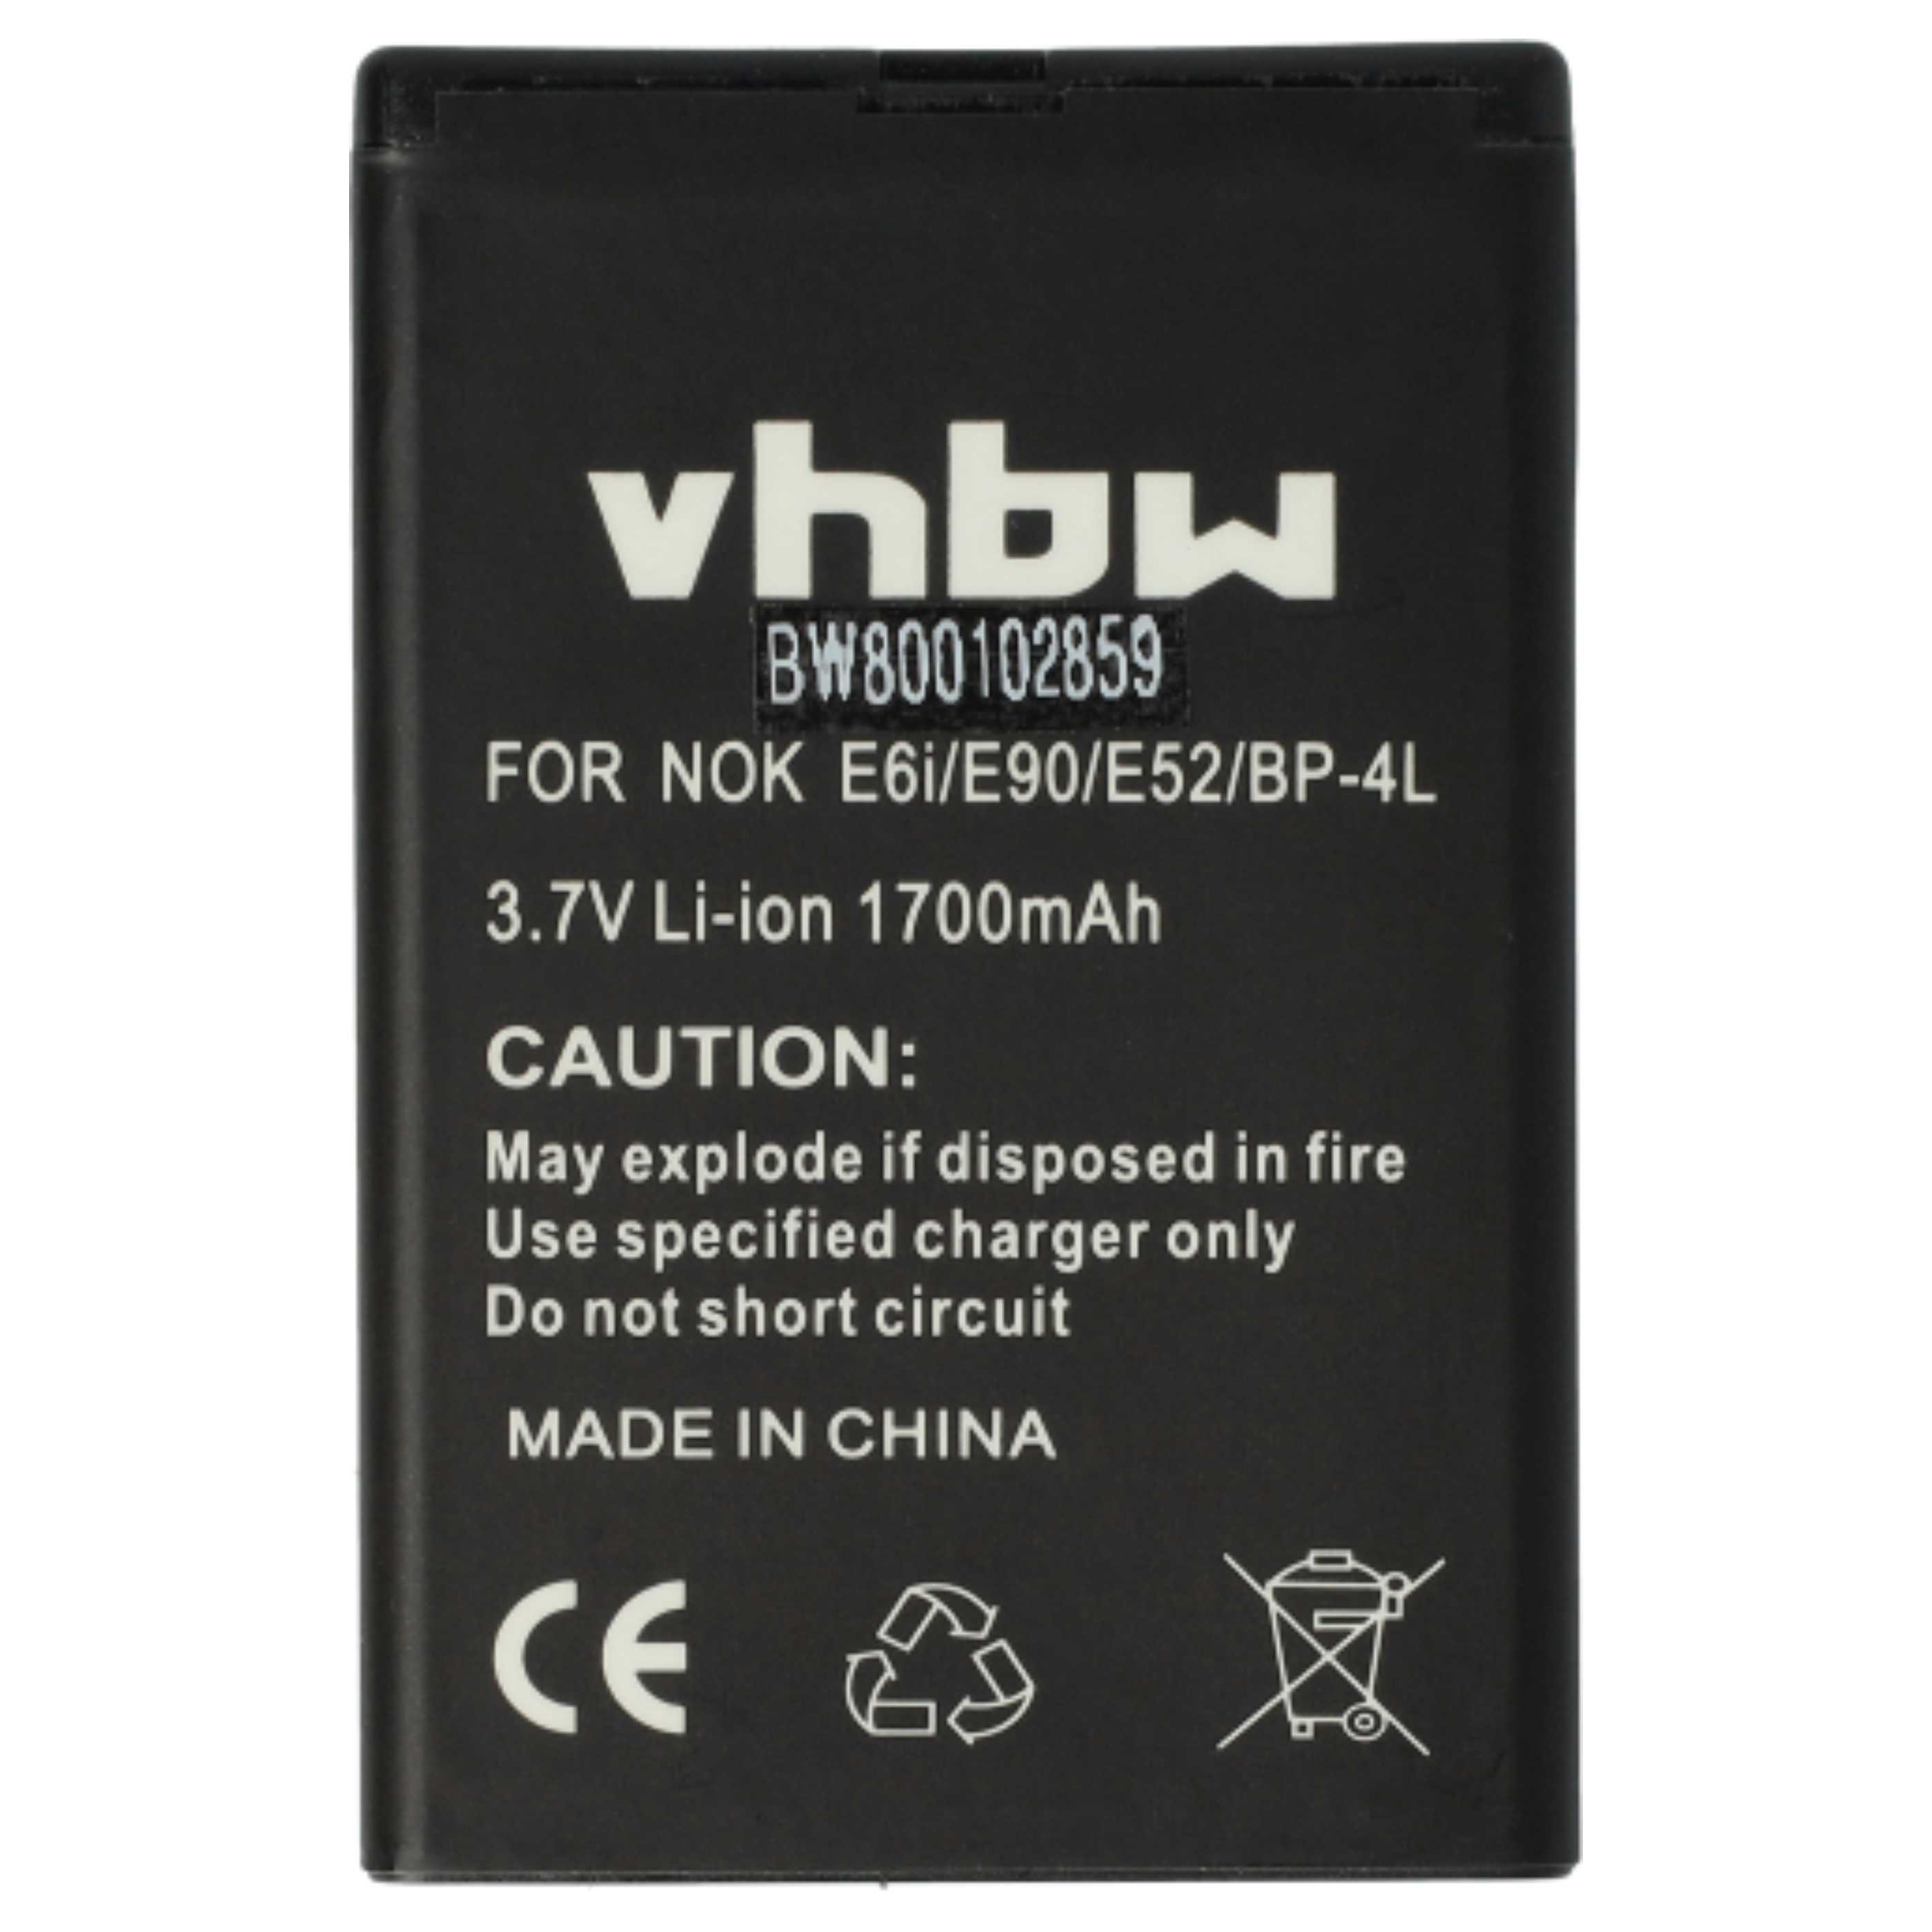 Batteria sostituisce Aligator D243, BL-6900, BP-140, A800BAL per cellulare Hyundai - 1700mAh 3,7V Li-Ion